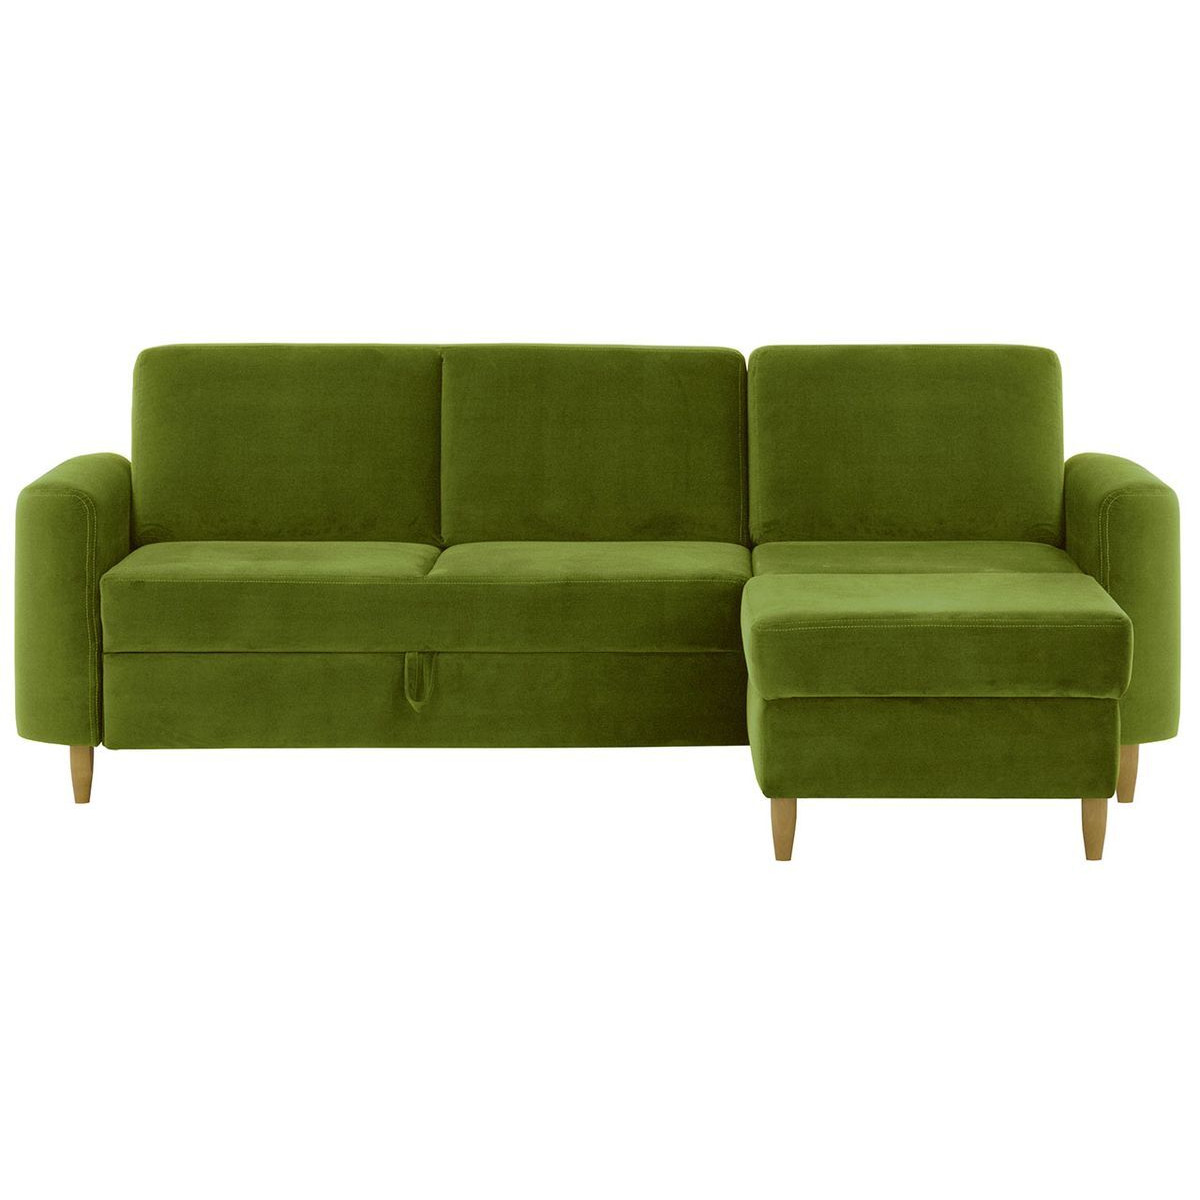 Elegance Corner Sofa Bed With Storage, lilac - image 1